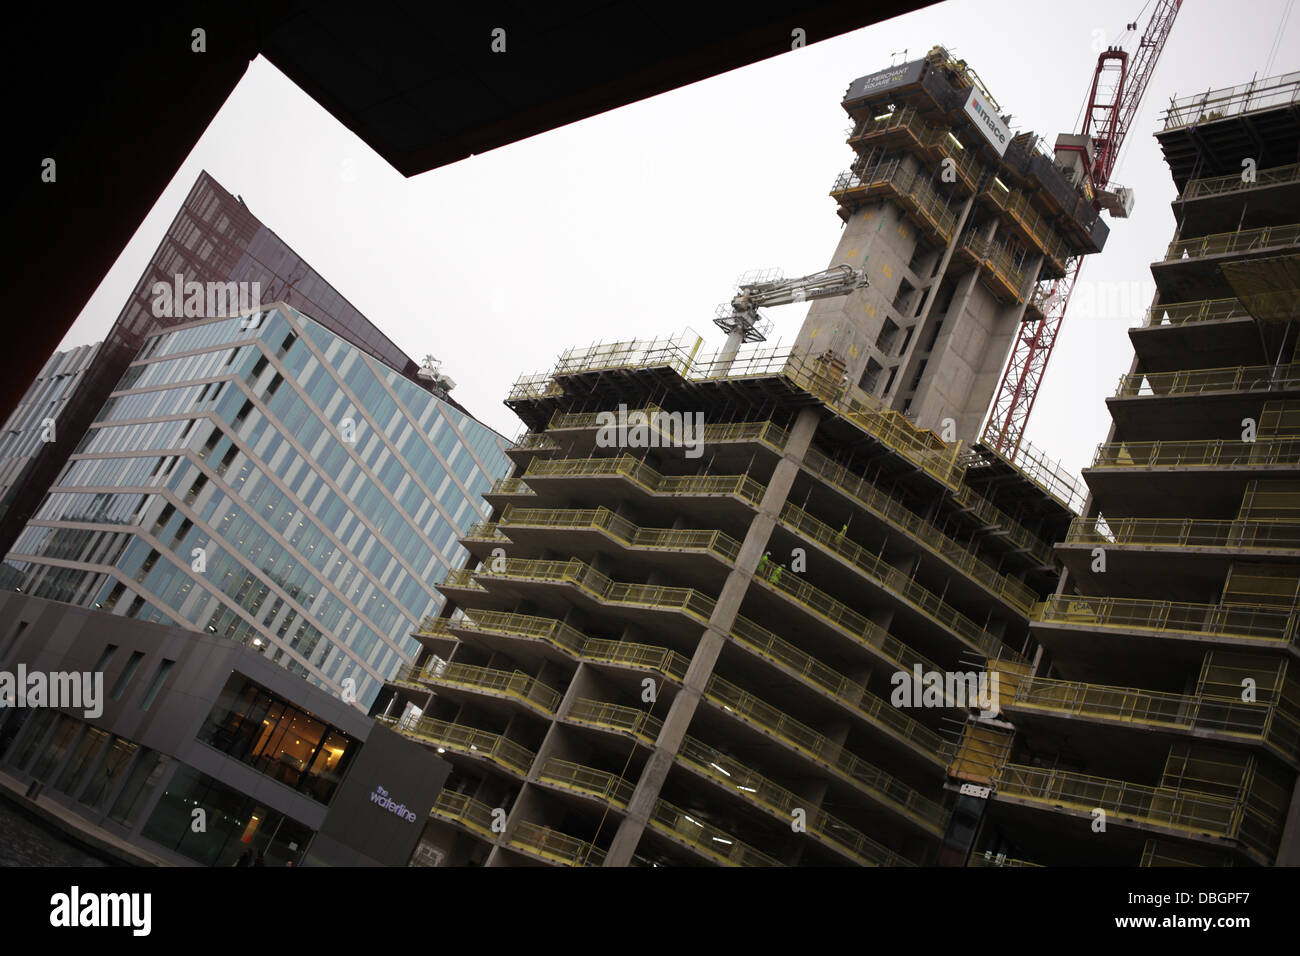 Umliegenden Gebäuden - Merchant Square Paddington Basin - London - England - UK Stockfoto